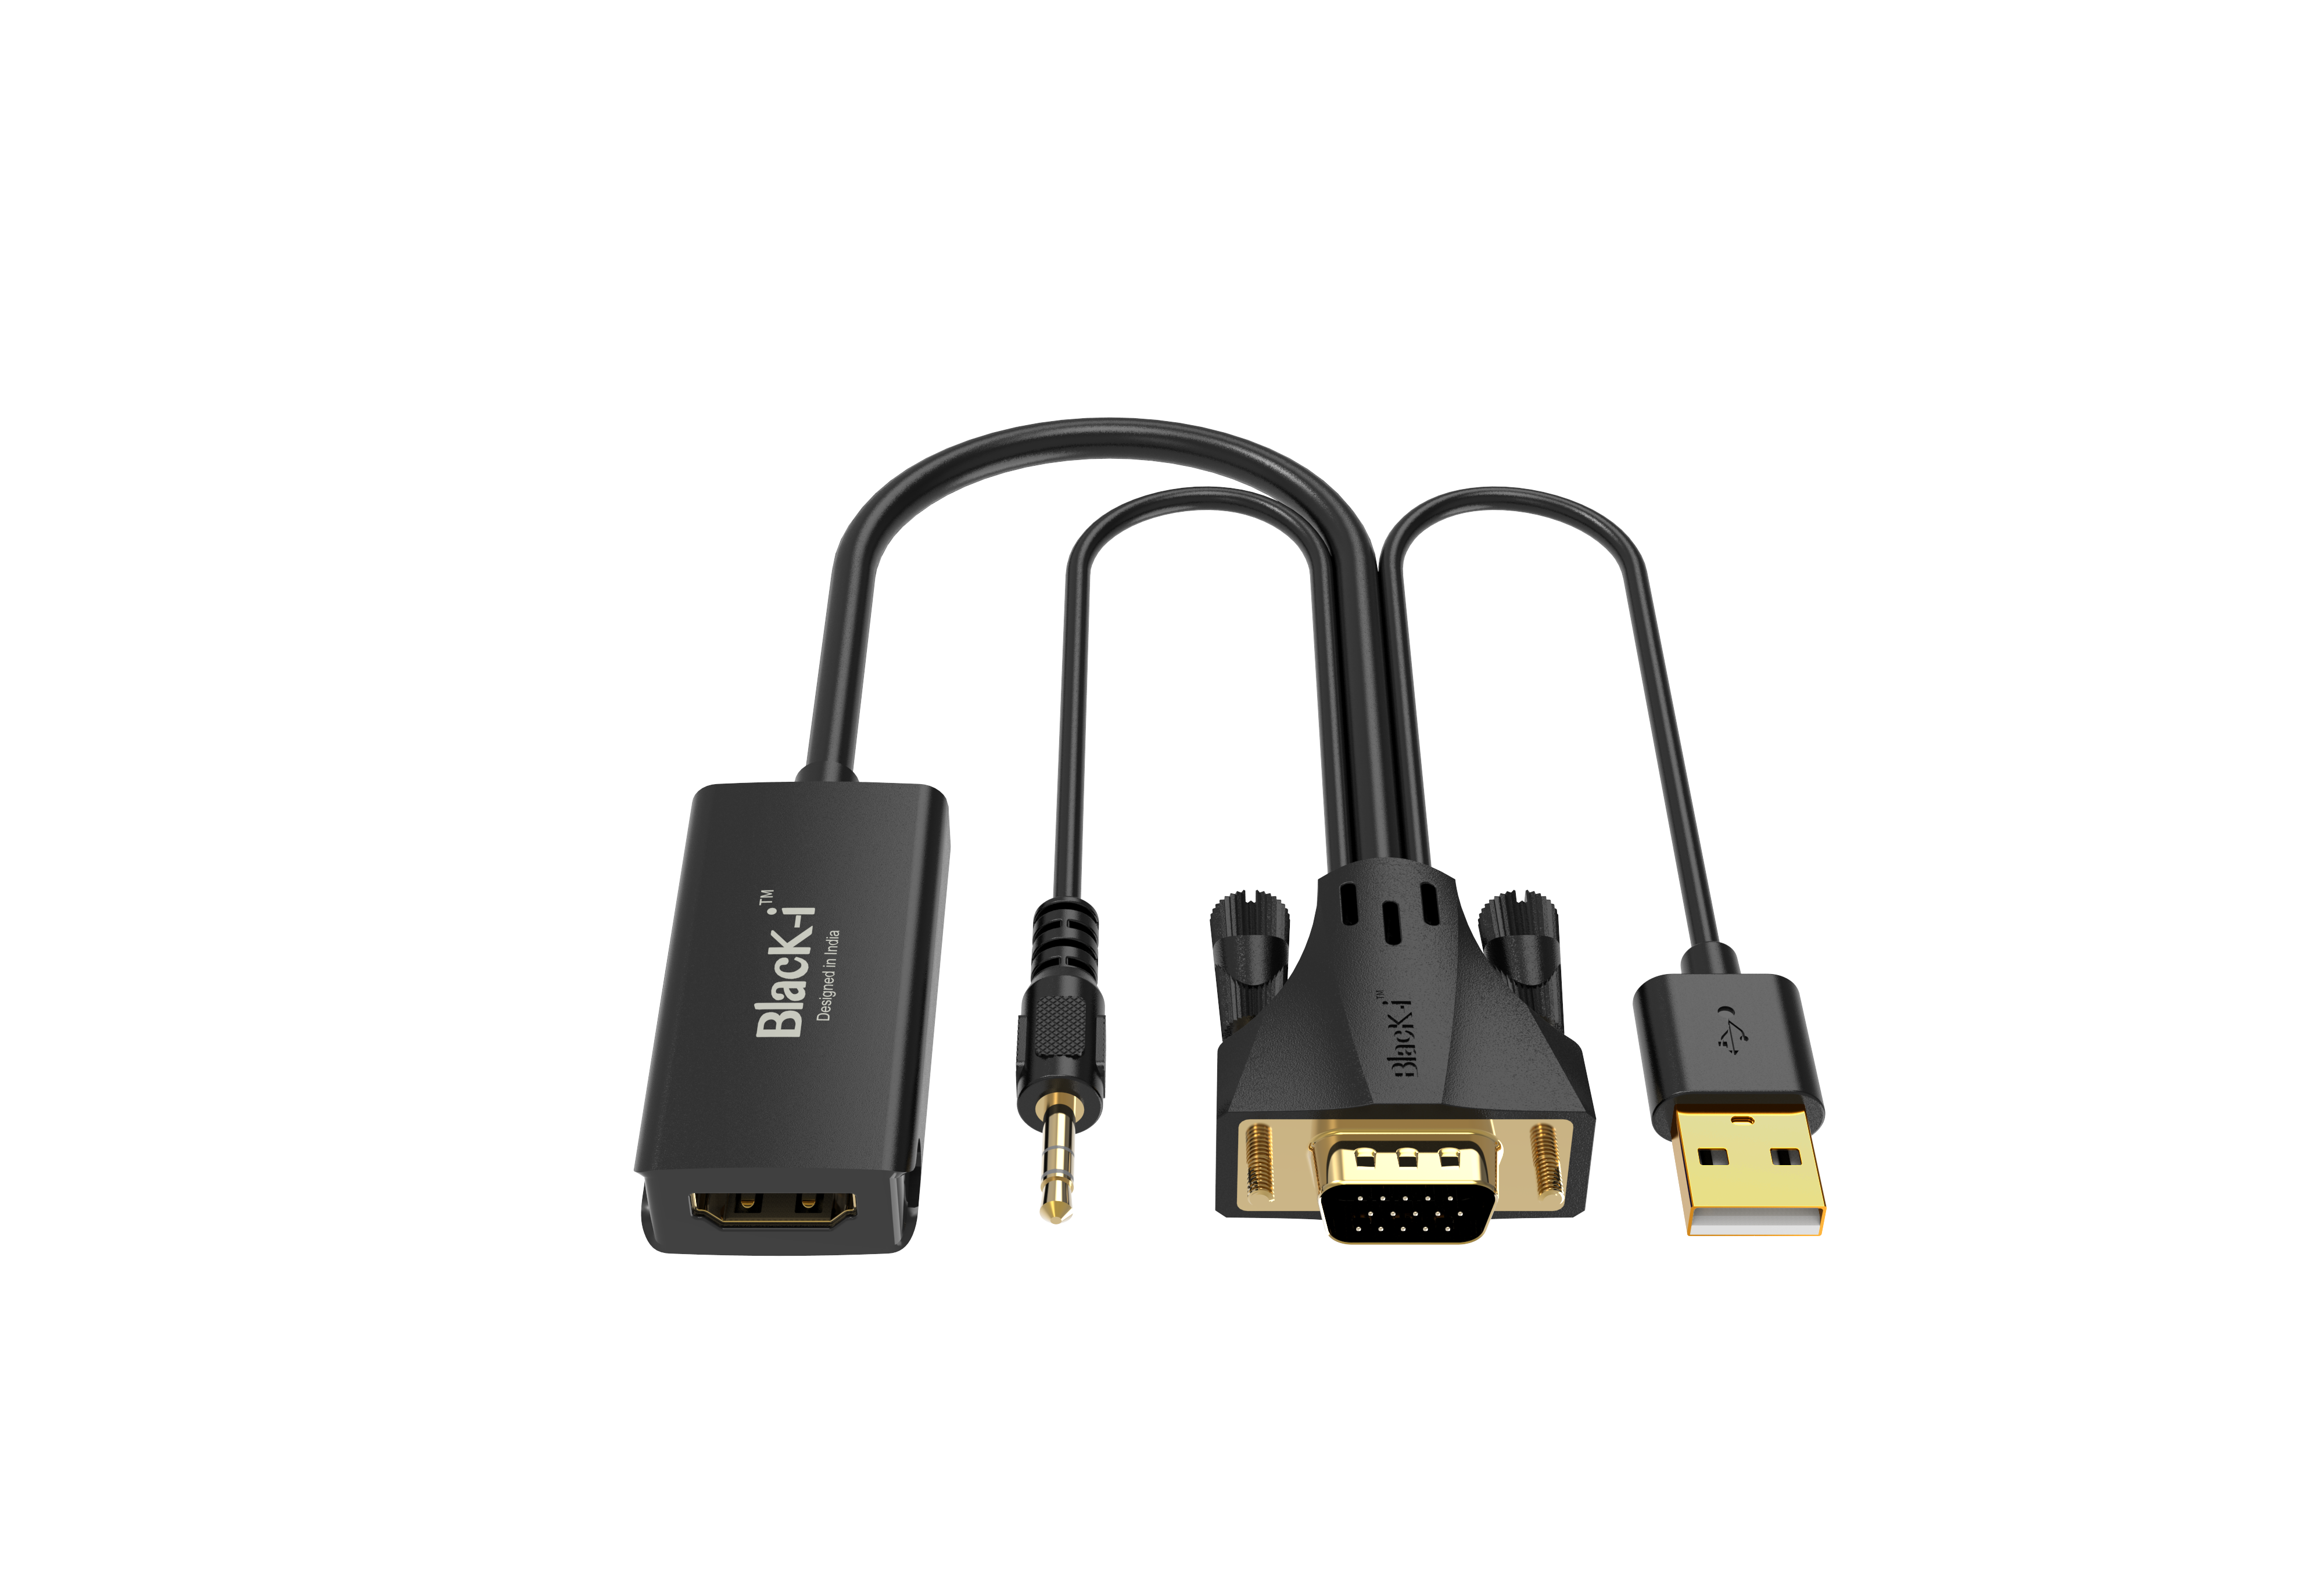 Black-i VGA to HDMI Converter with Audio